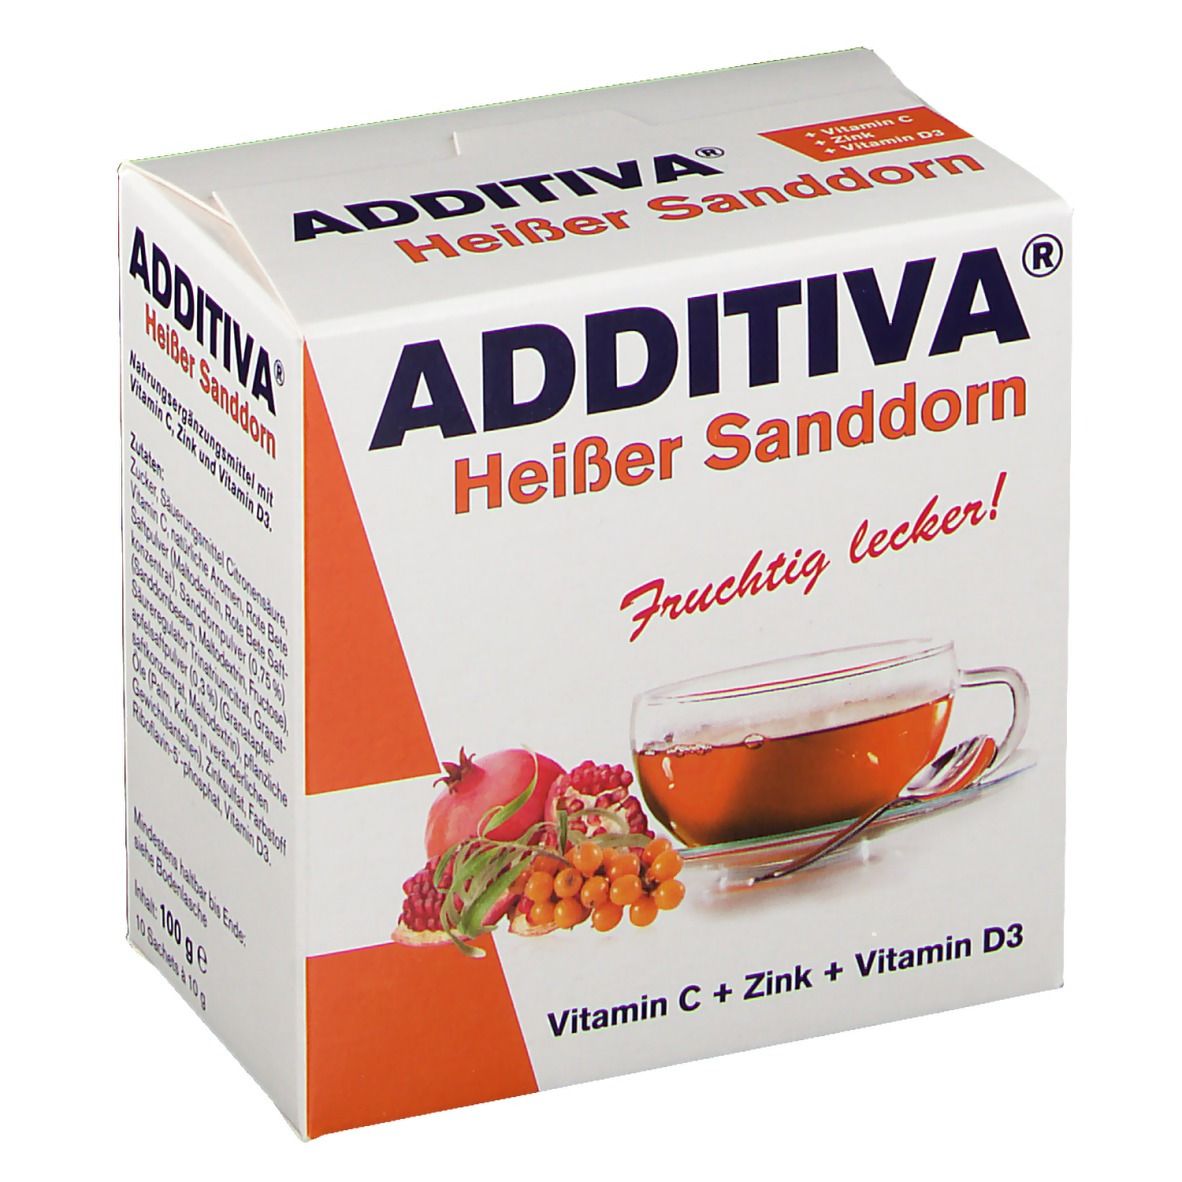 Additiva® hot sanddorn